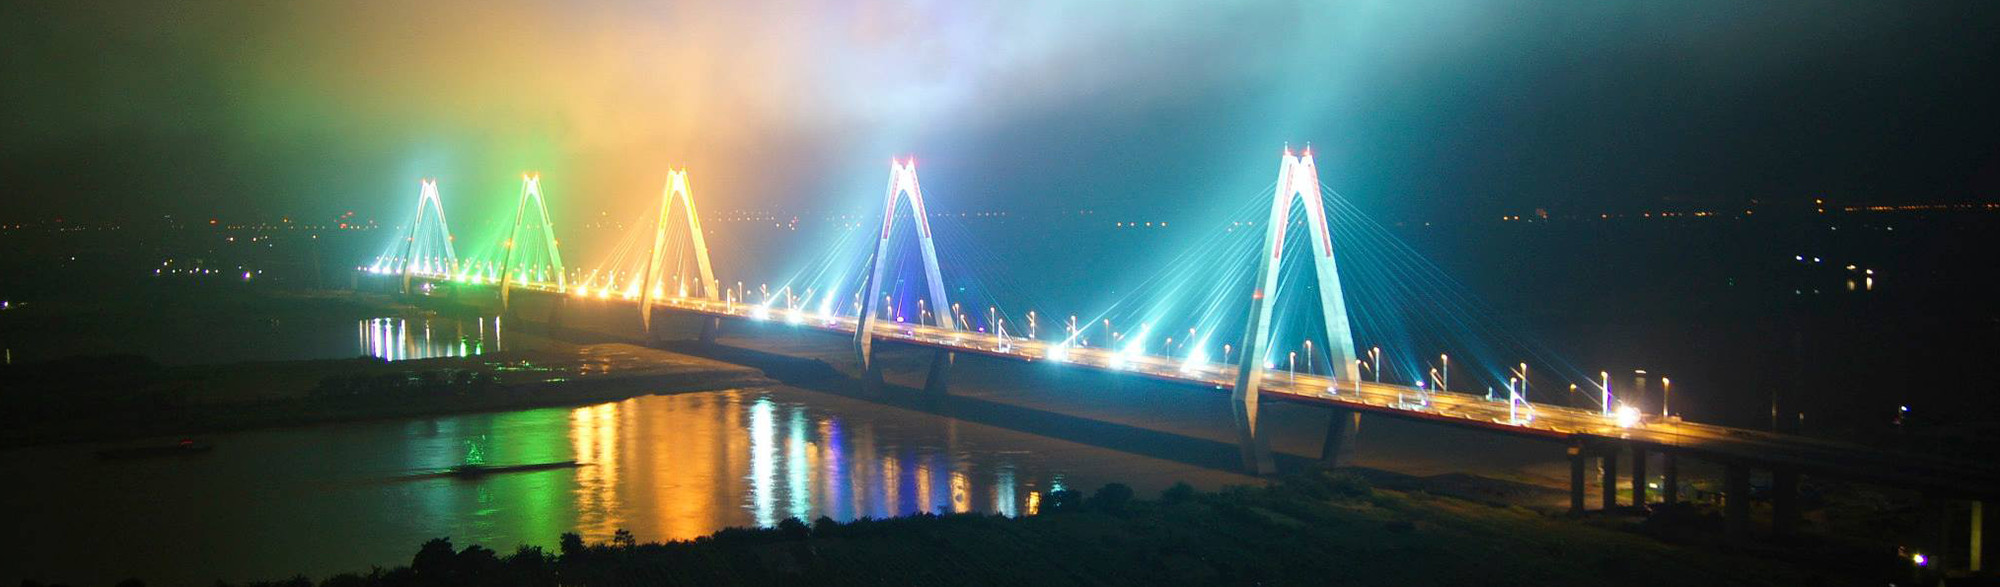 Hanoi Nhật Tân Bridge (Vietnam - Japan Friendship Bridge)